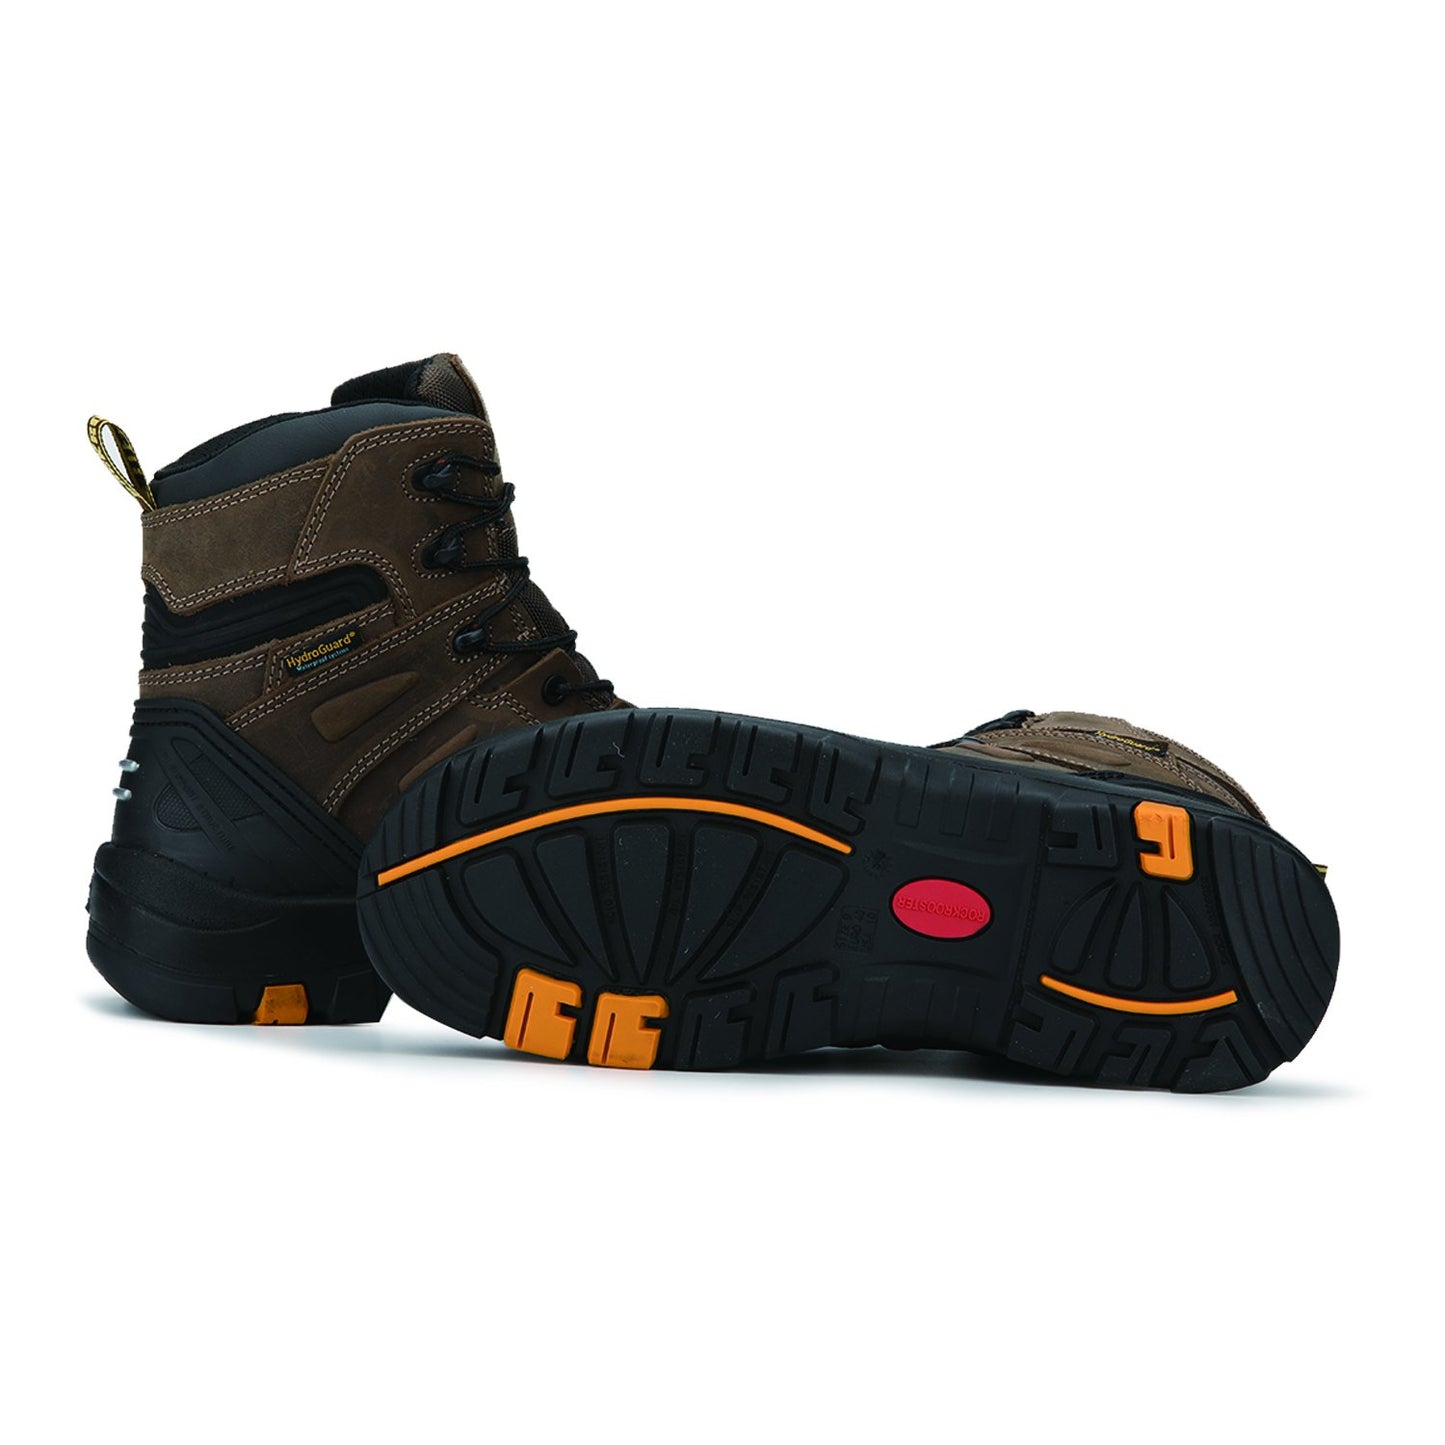 Dark Brown 6 inch Waterproof Soft Toe Leather Work Boots AK639